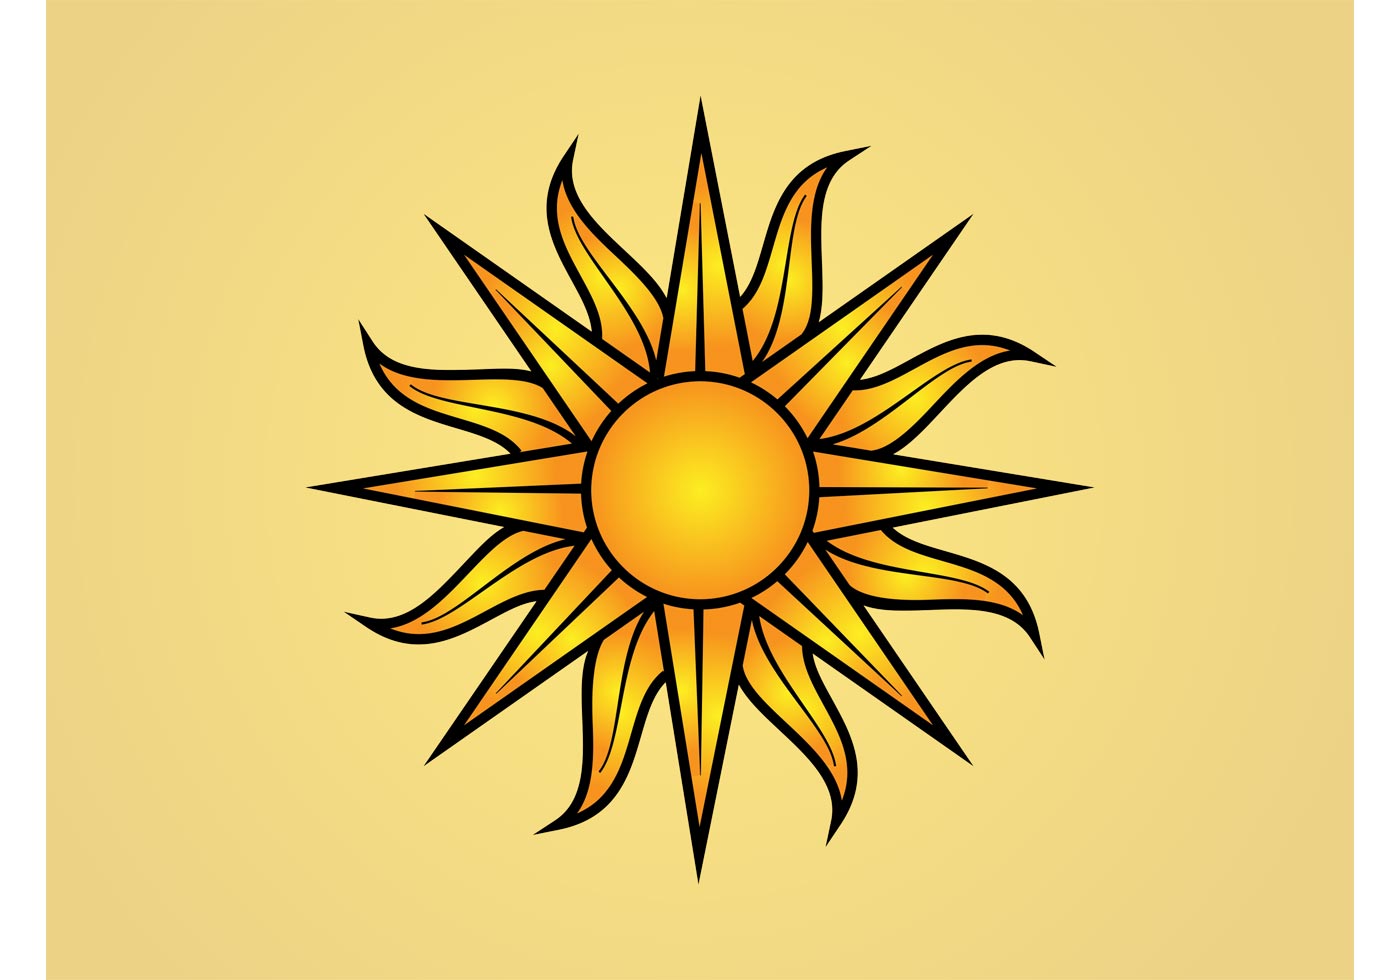 Sun Logo Free Vector Art - (8609 Free Downloads)